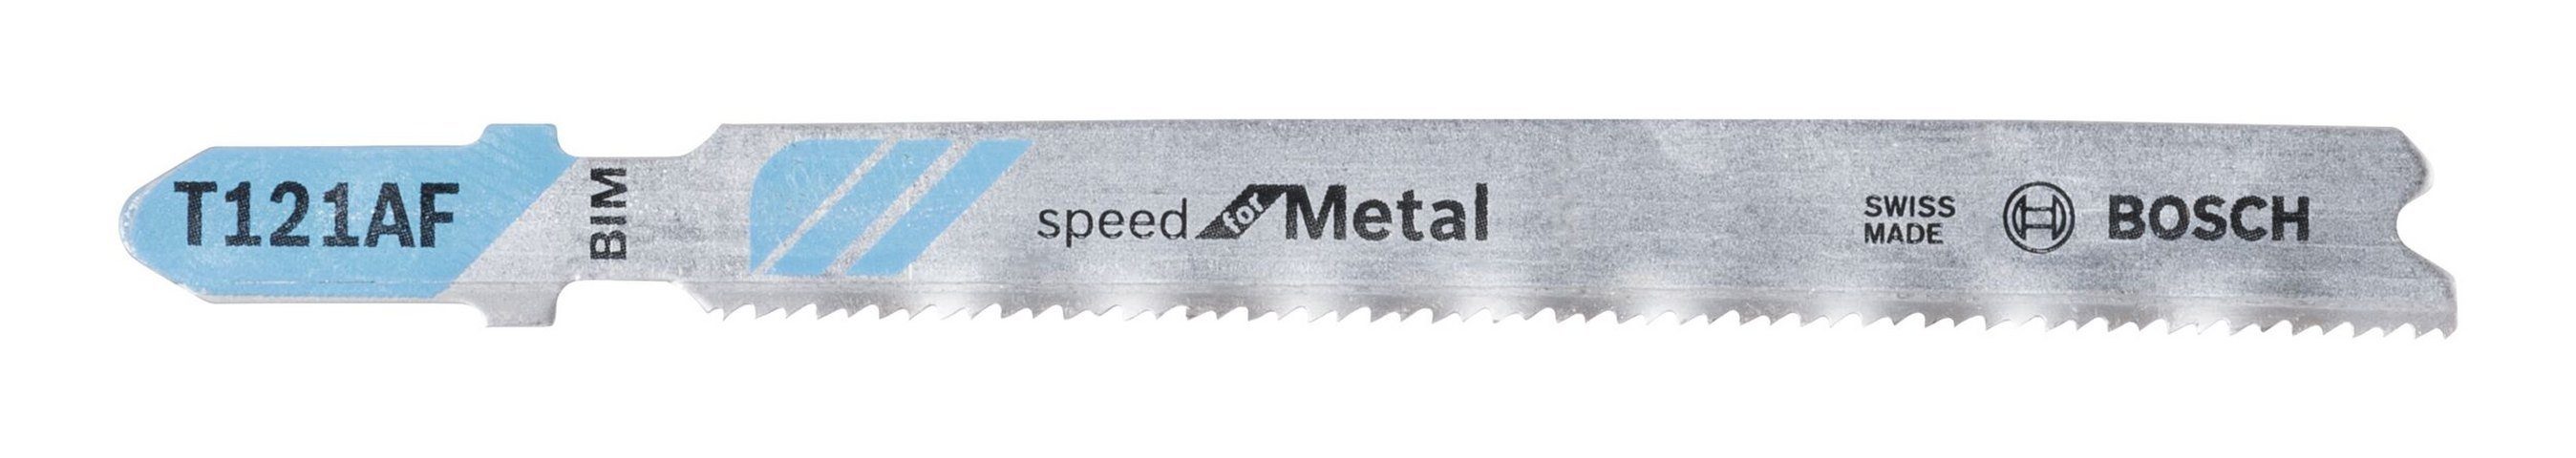 BOSCH Stichsägeblatt (3 Stück), T 121 AF Speed for Metal - 3er-Pack | Stichsägeblätter